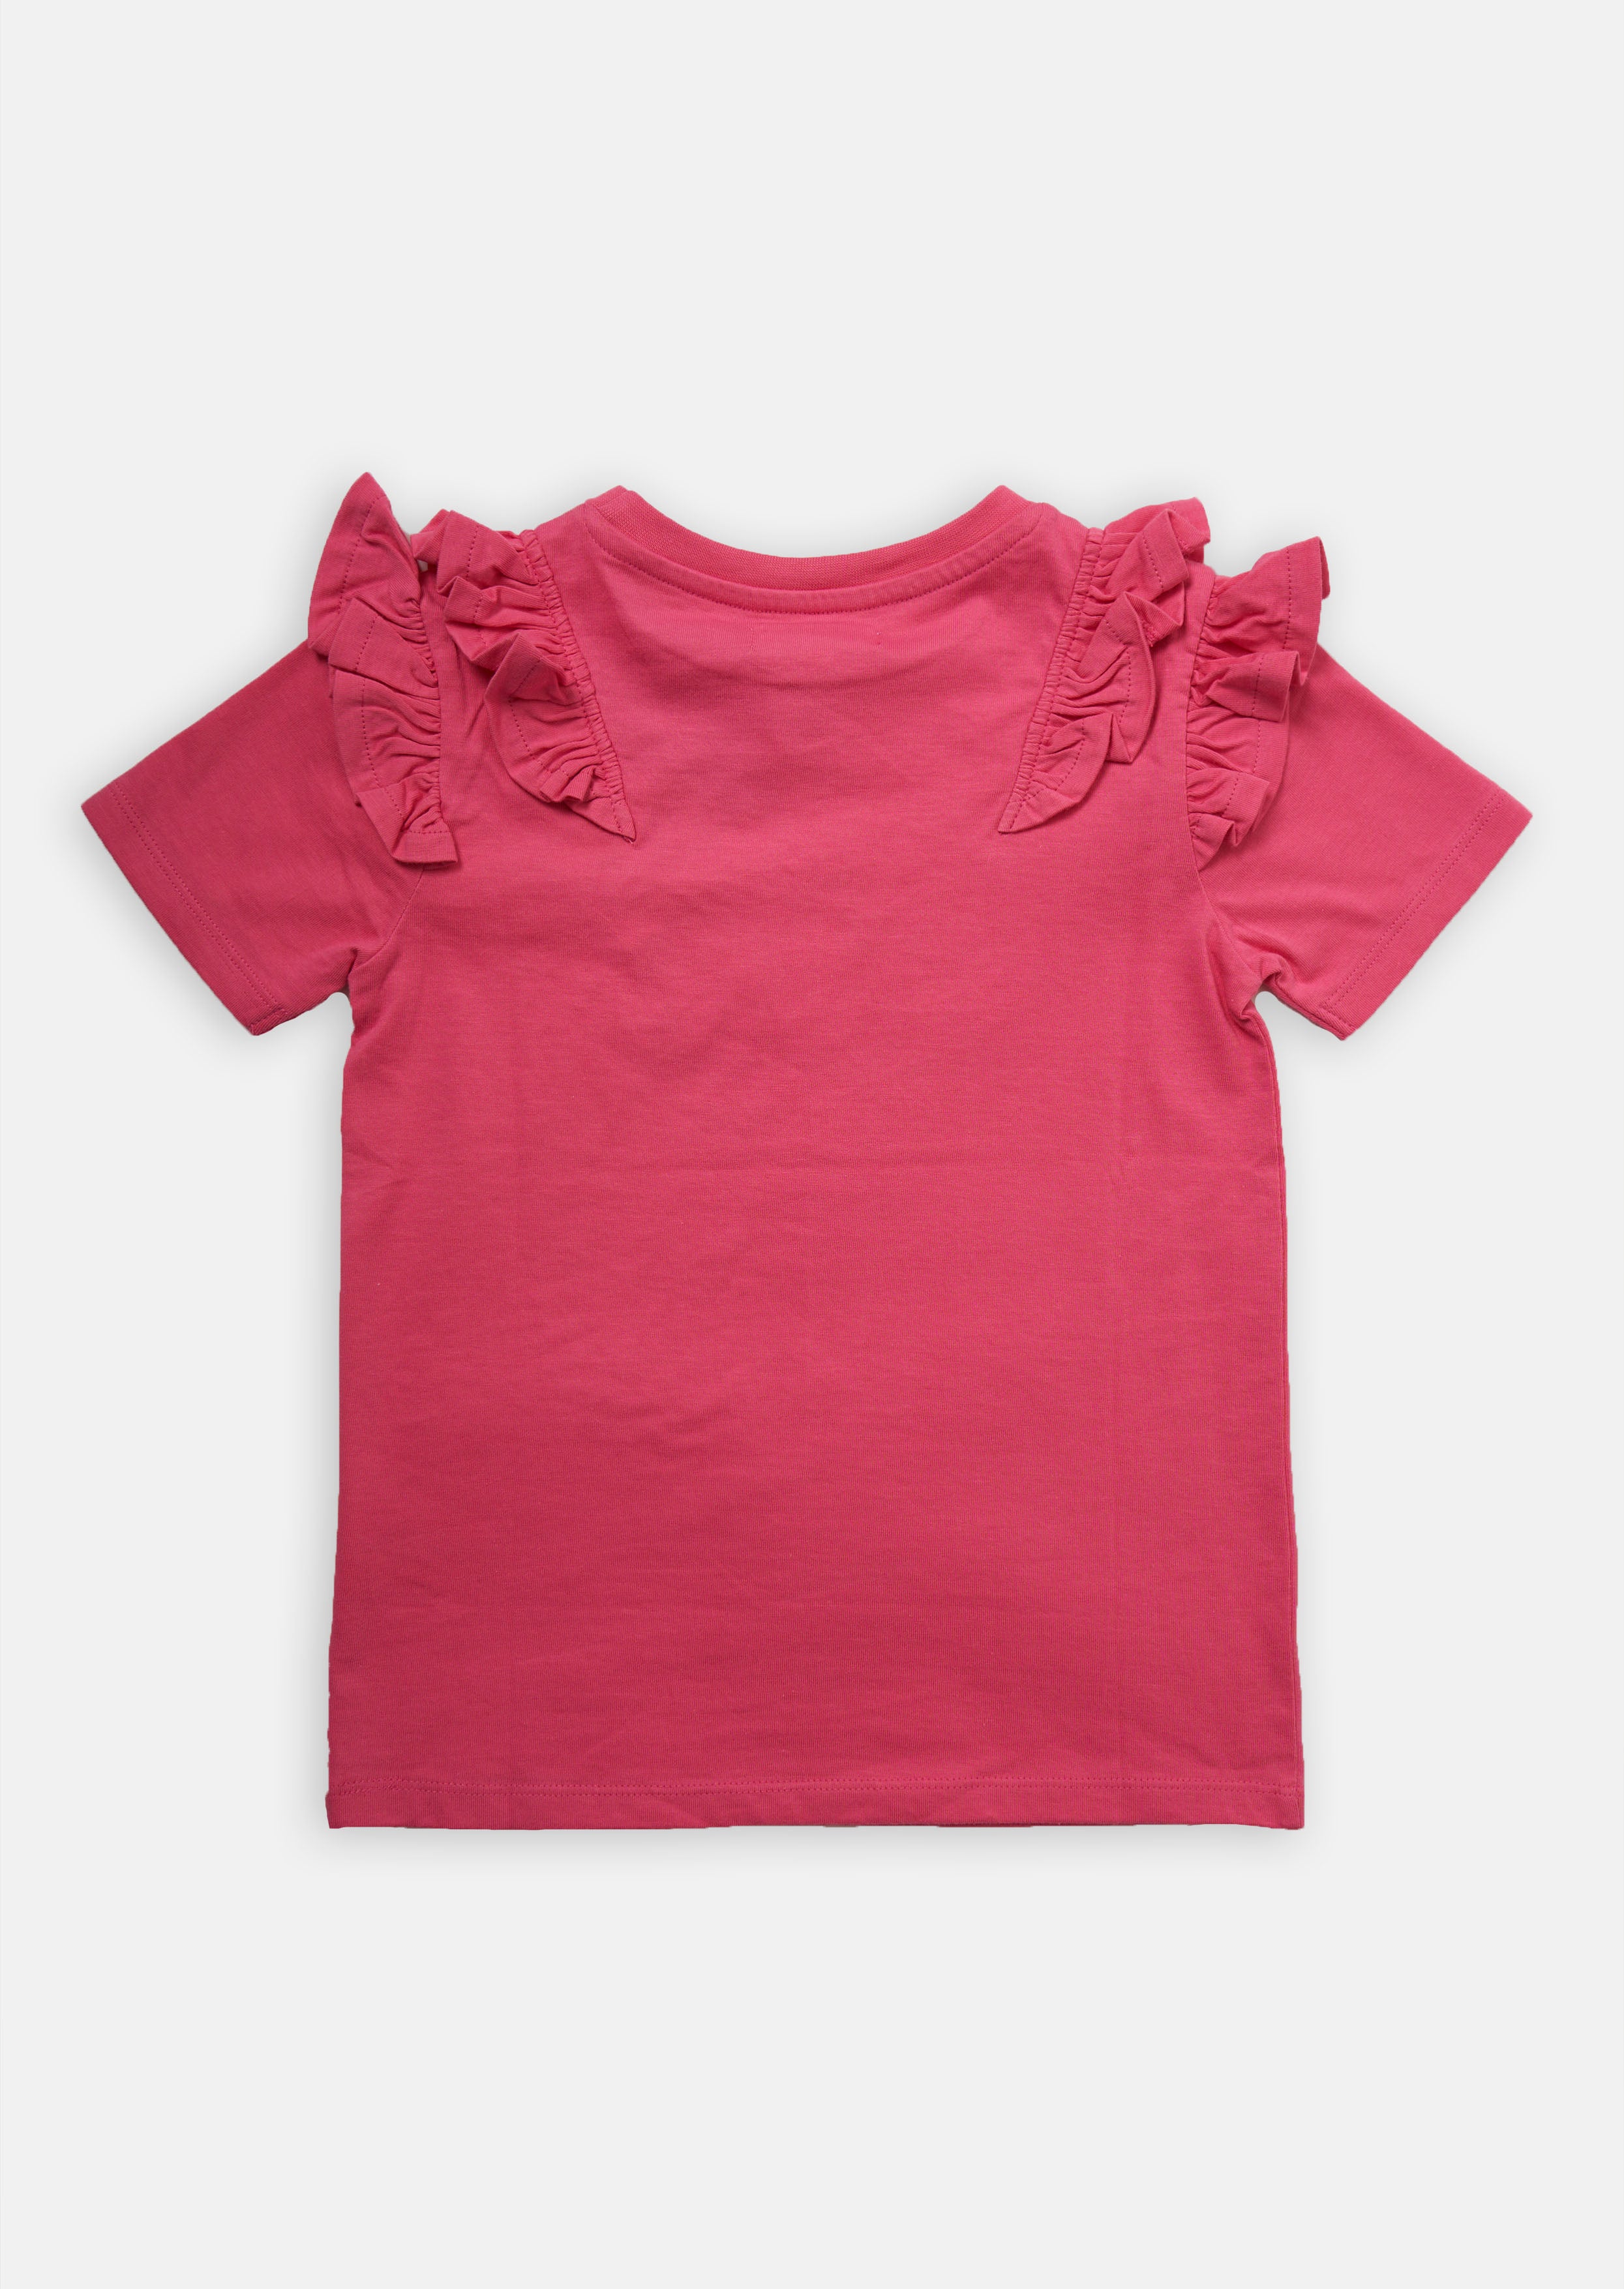 Girls Rainbow Printed Cotton Pink T-Shirt